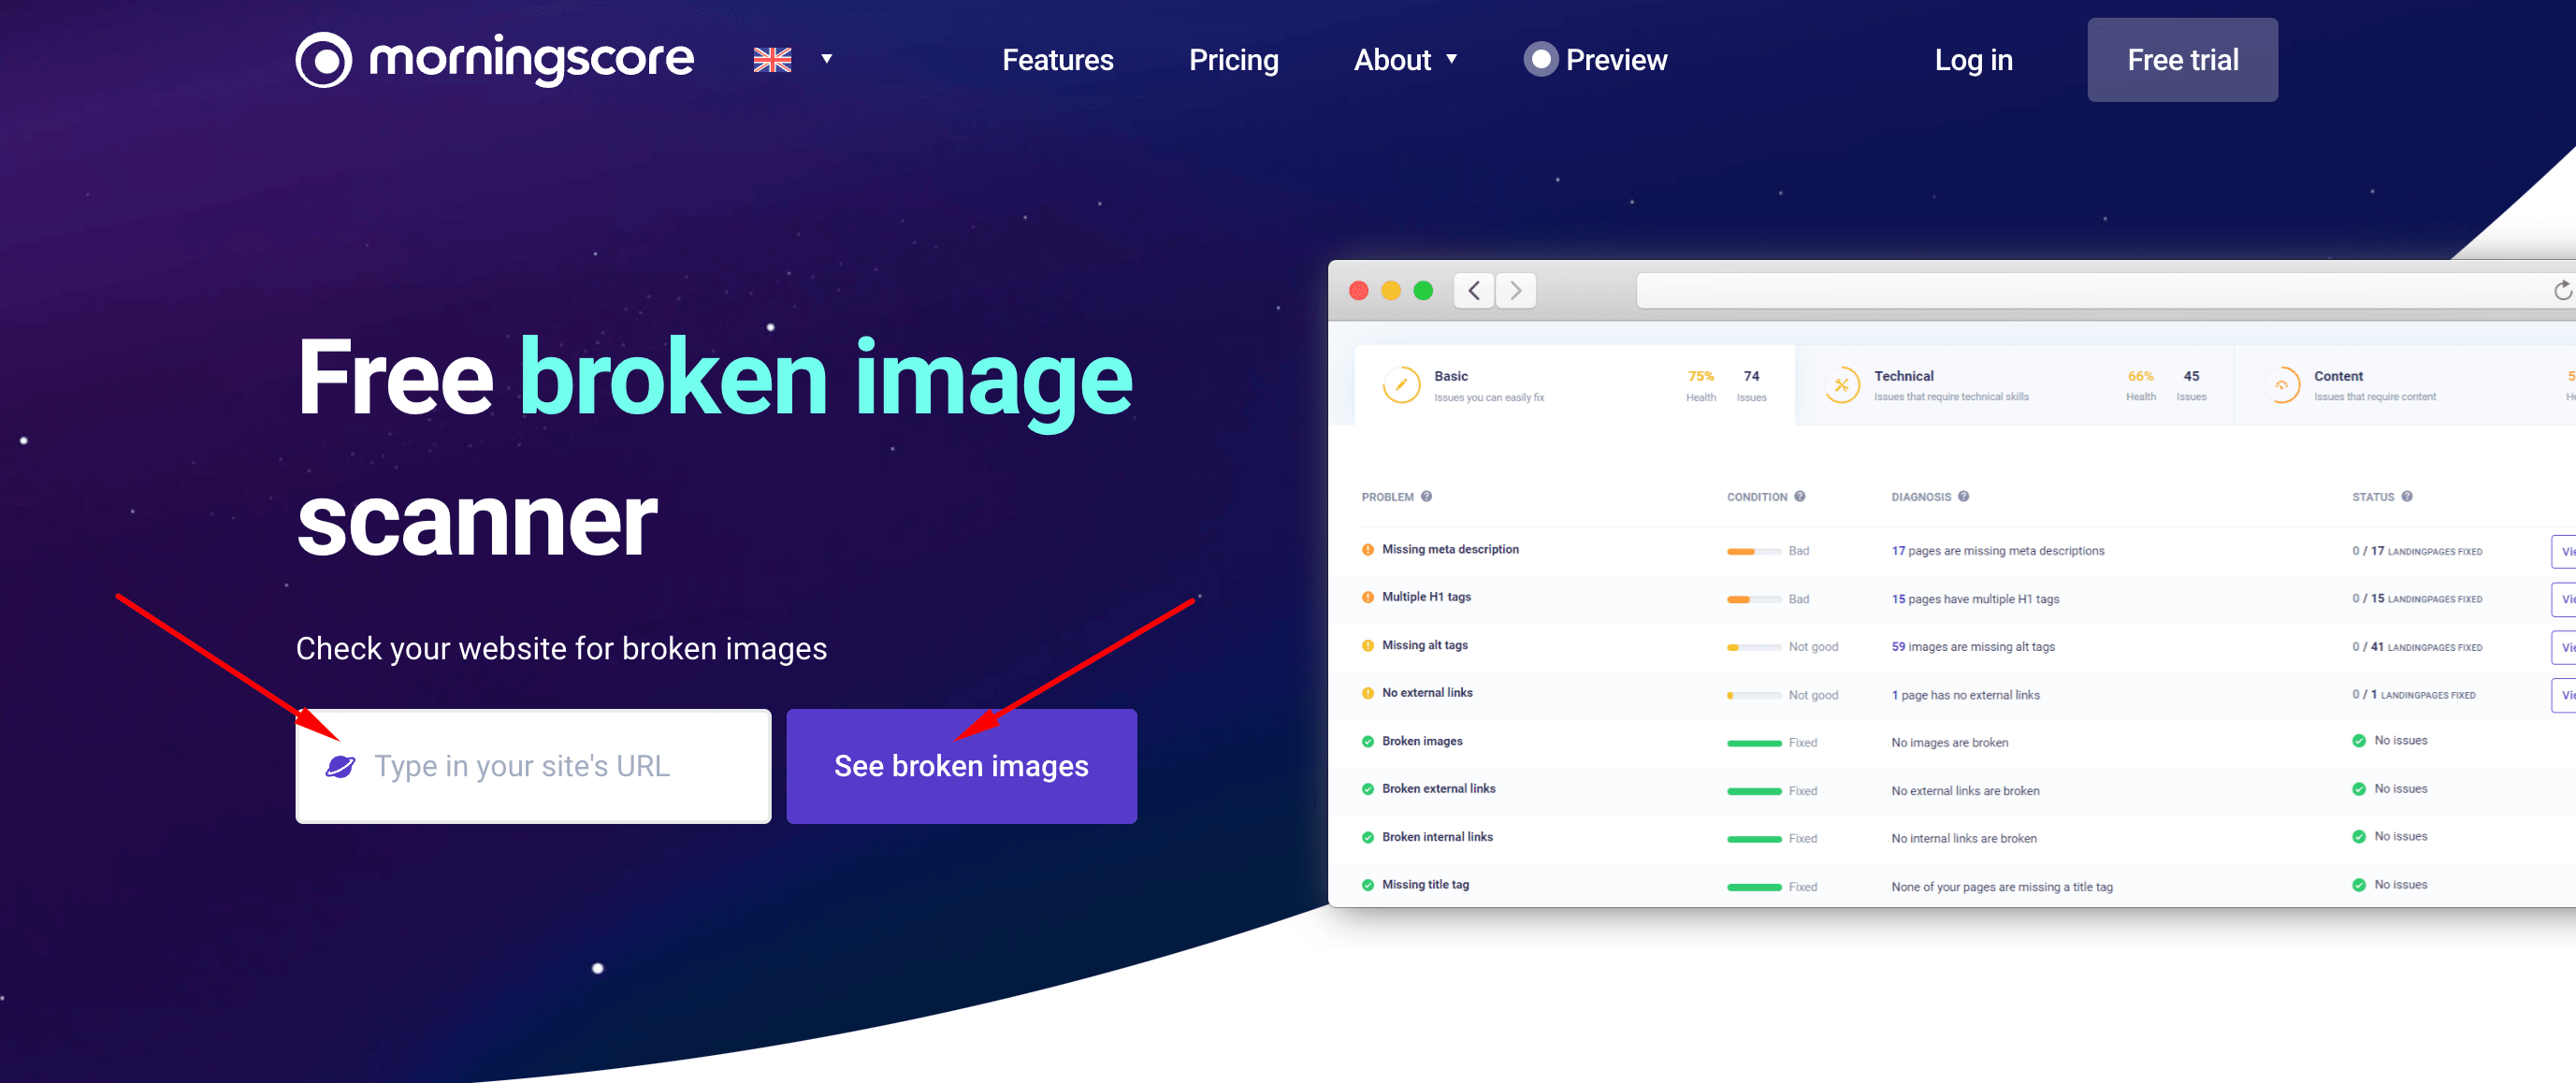 Scan for broken images on your website